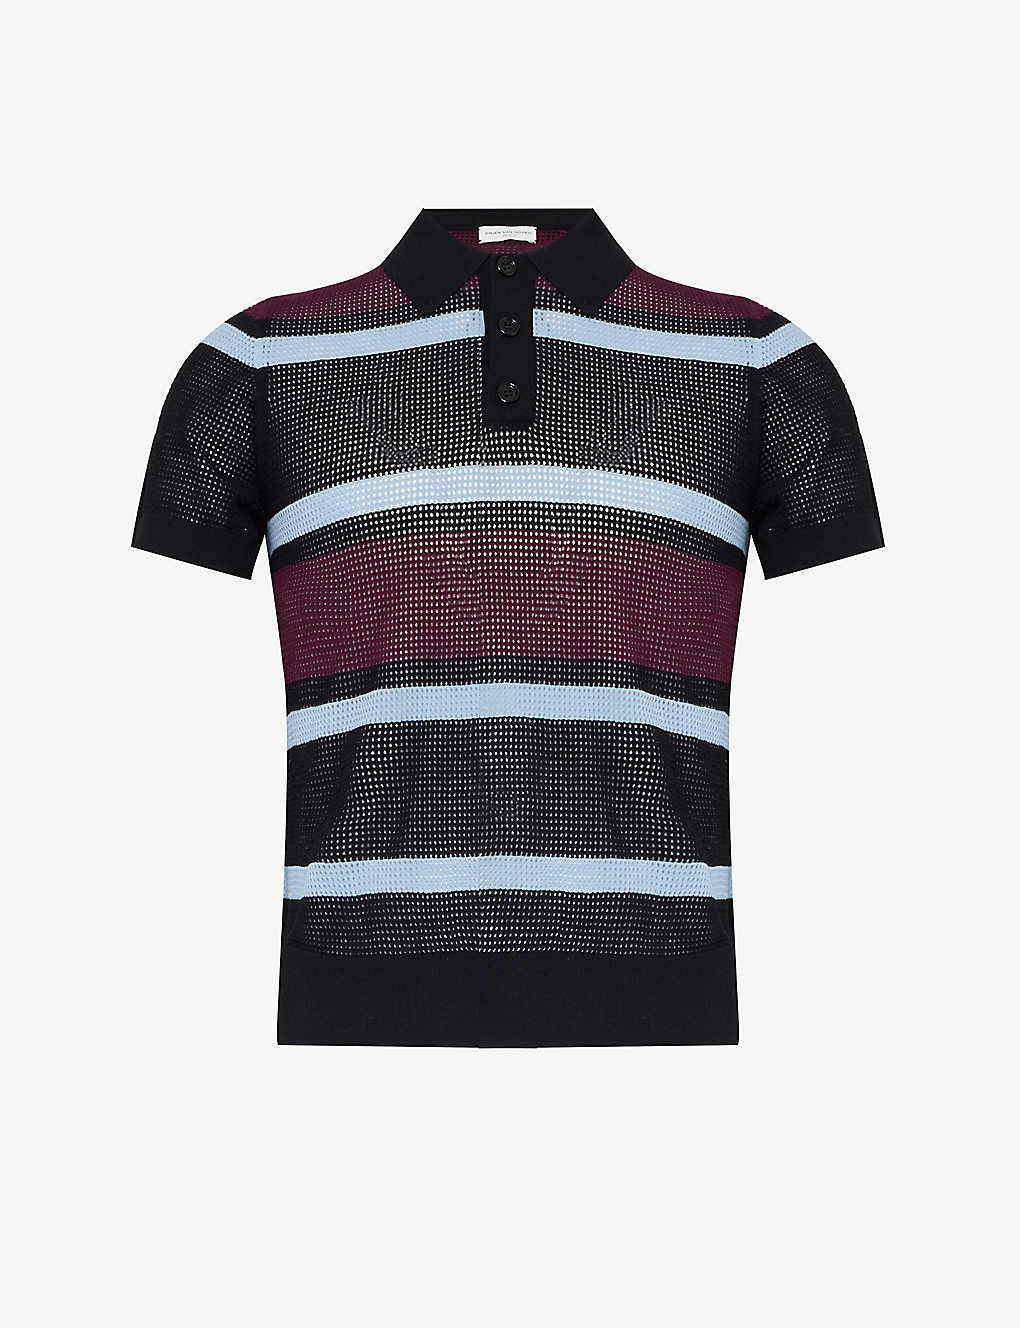 Dries Van Noten Mens Black Open-mesh Striped Knitted Polo Shirt